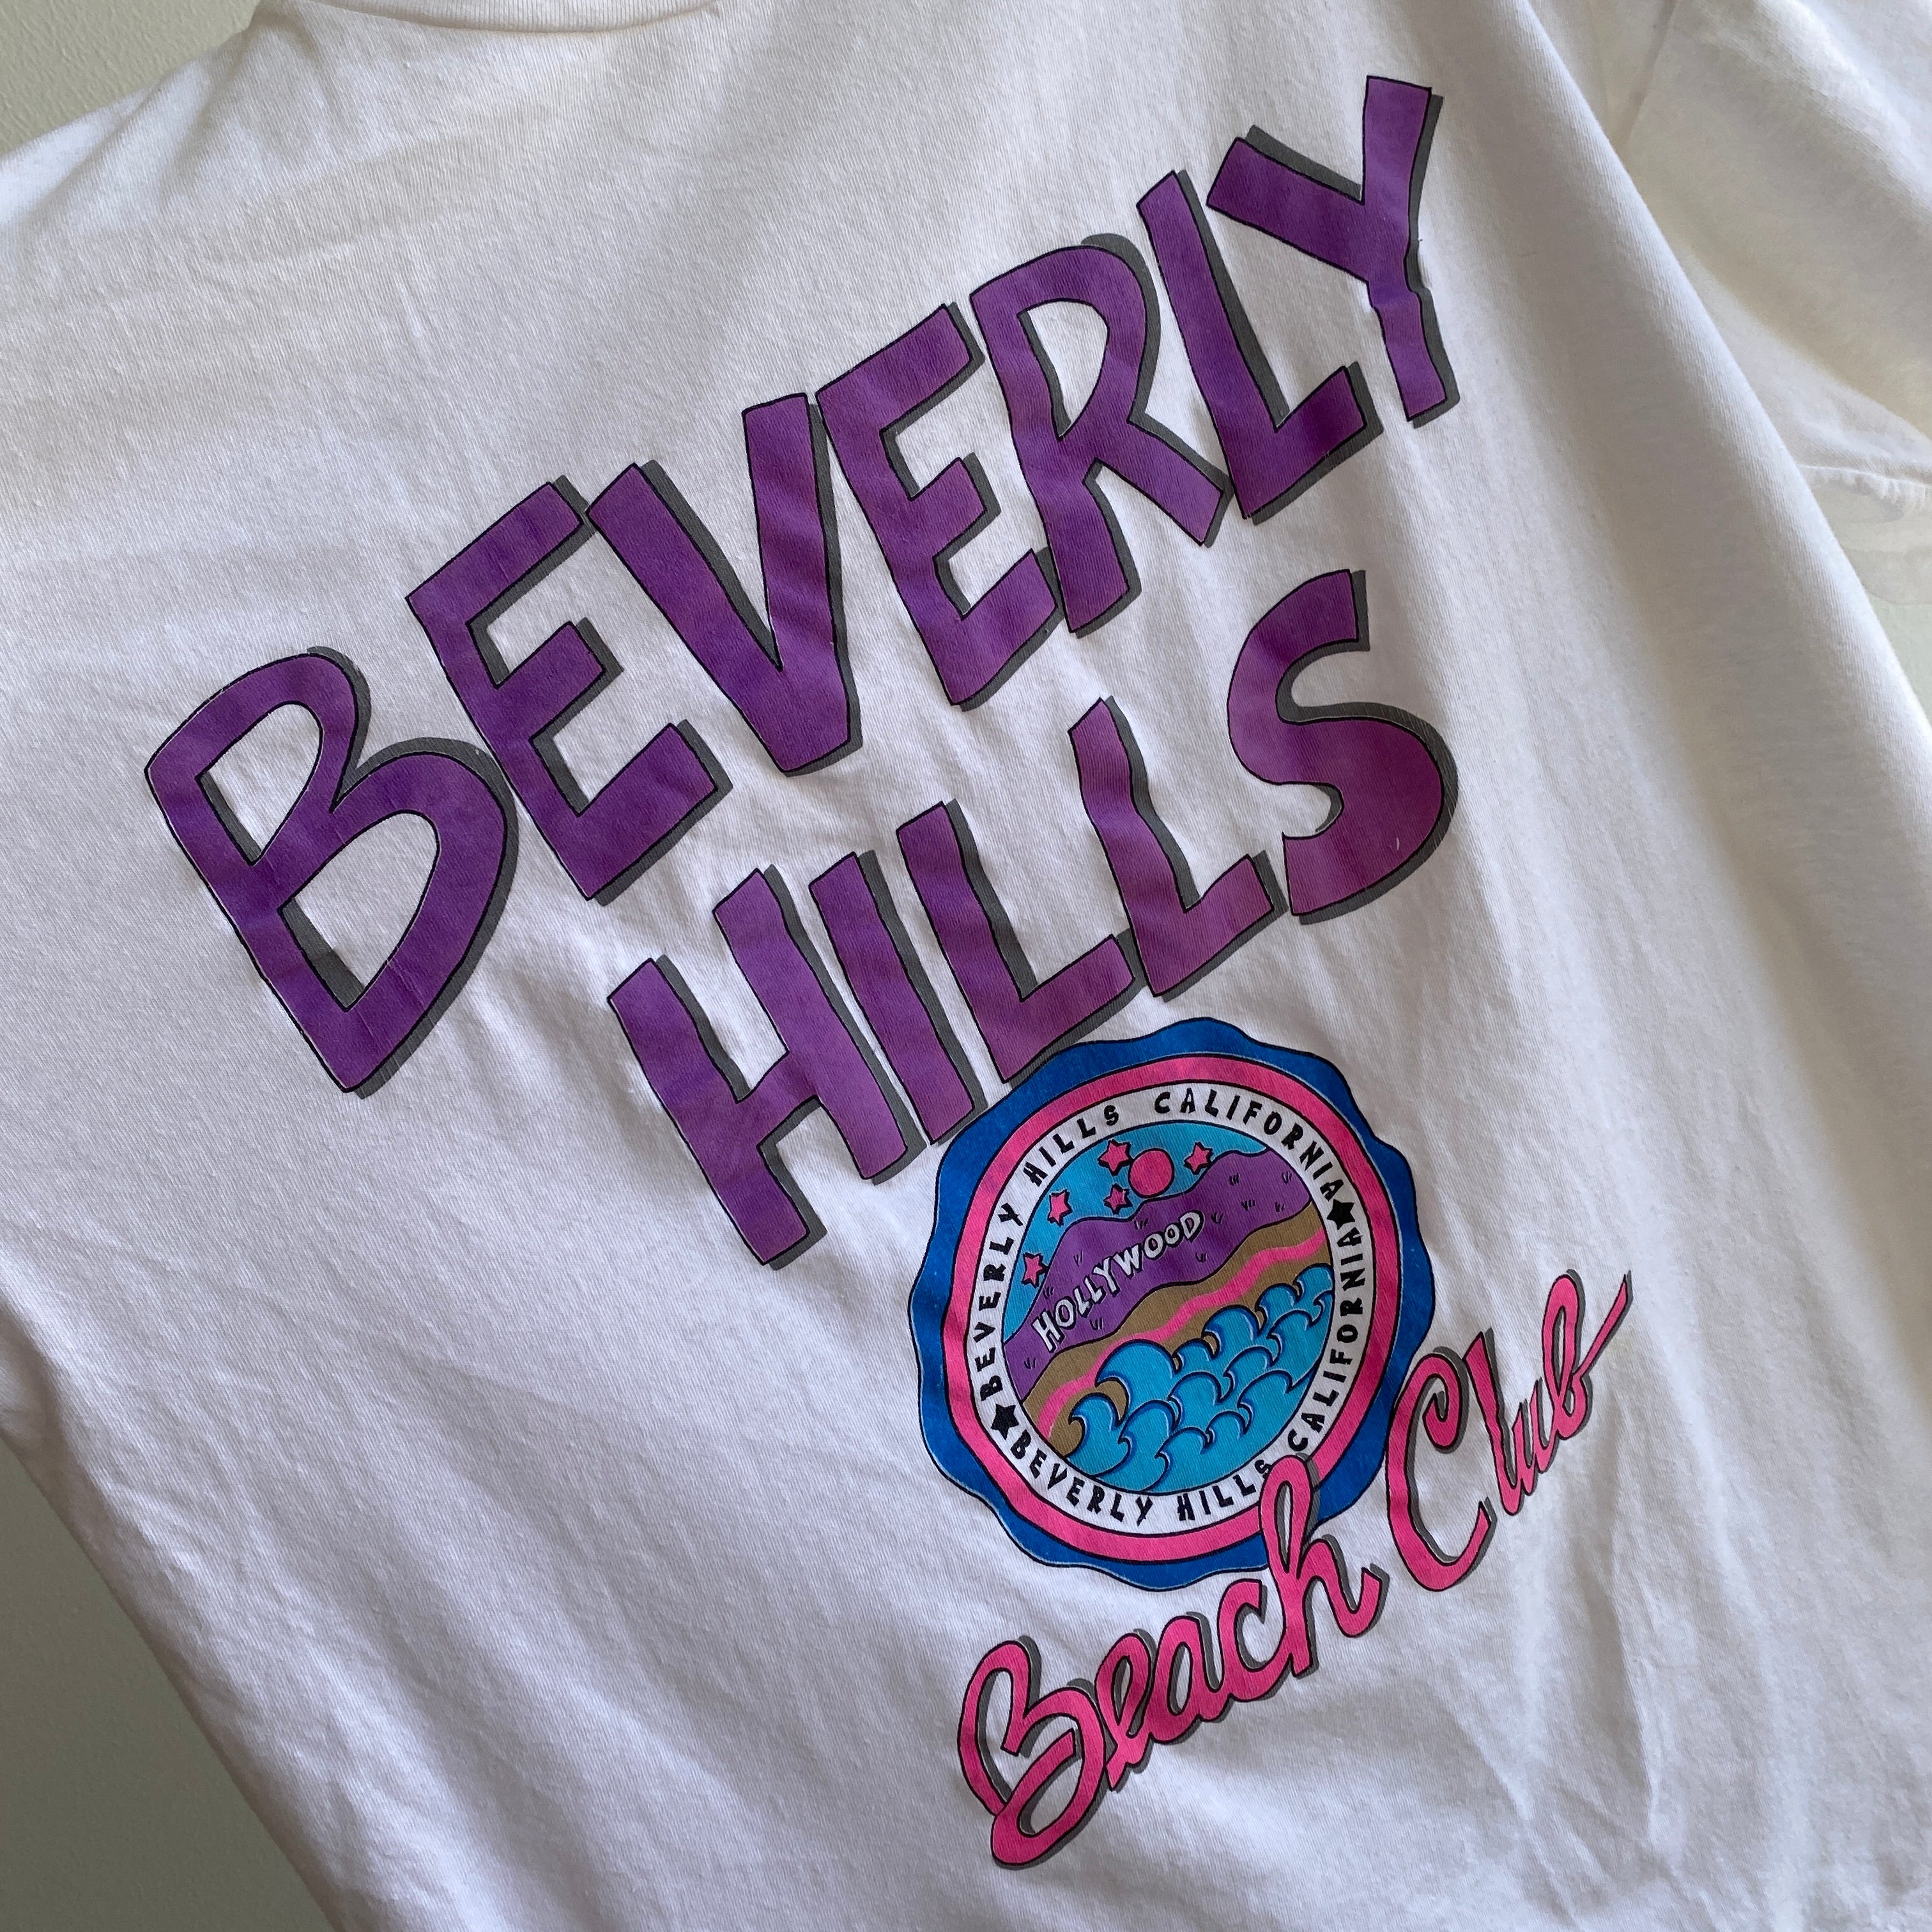 1990s OSFMANY Beverly Hills Beach Club T-Shirt